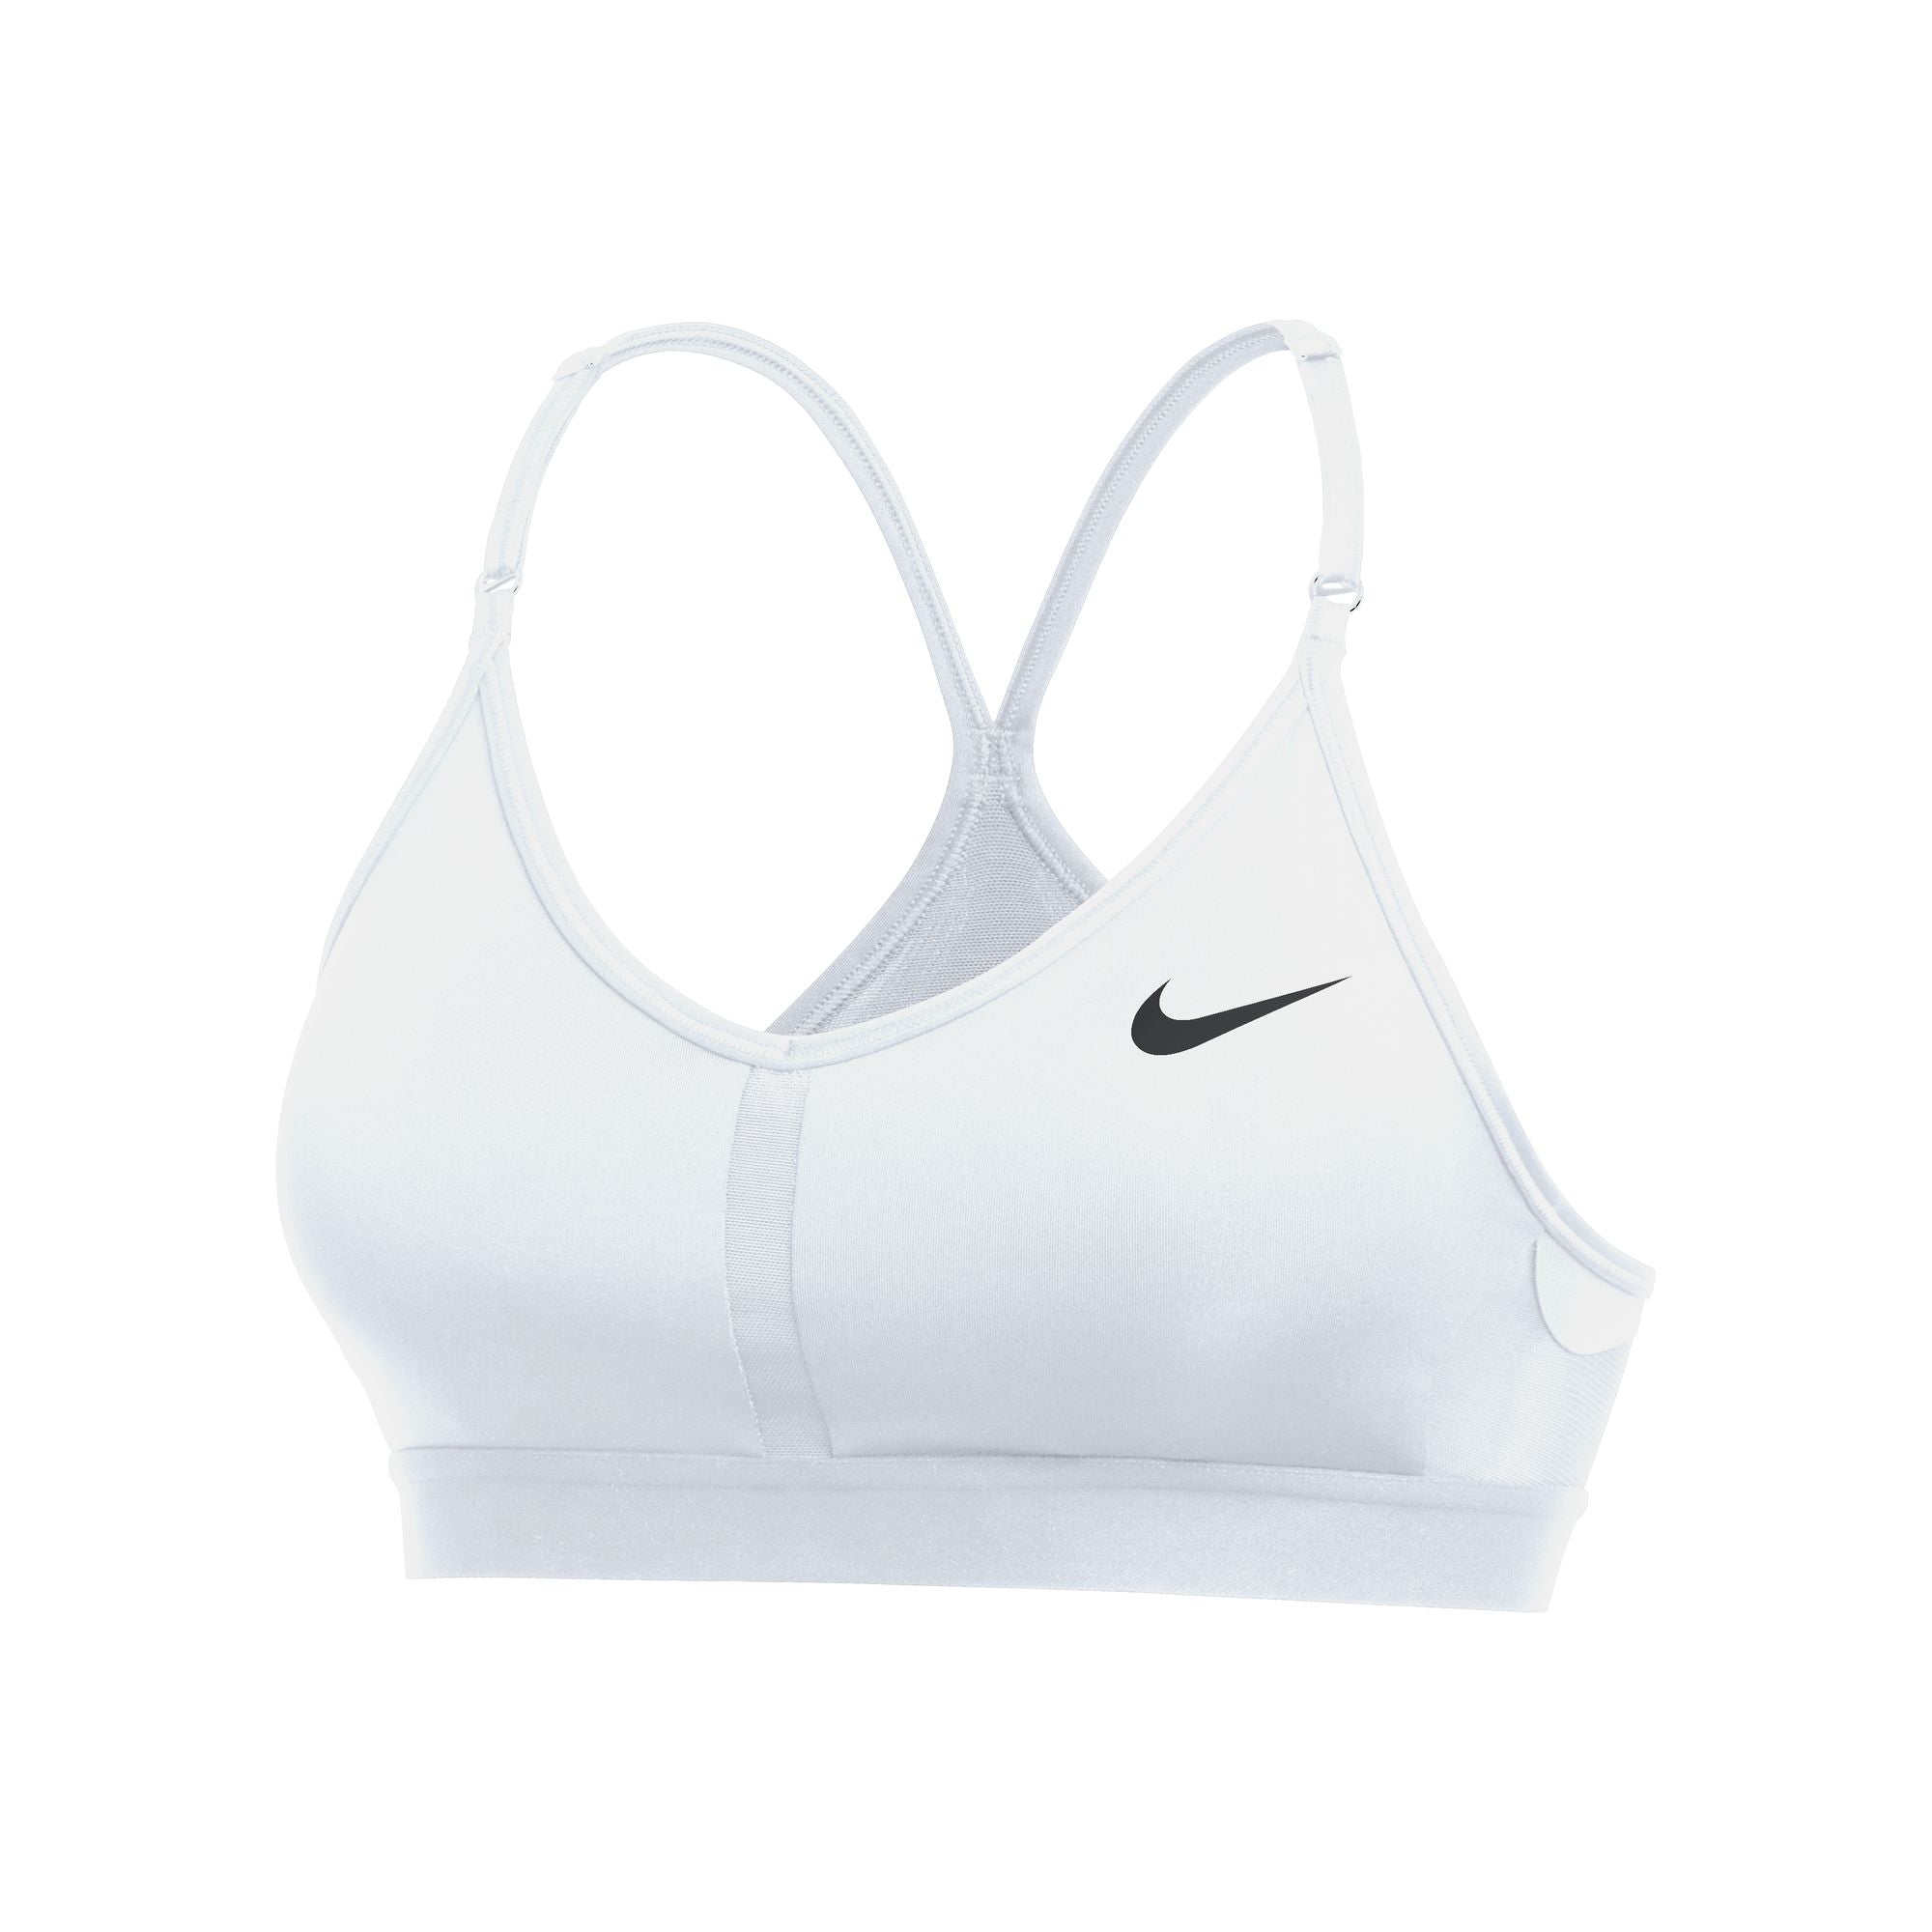 (Large, White) - Nike Women's Indy Sports Bra